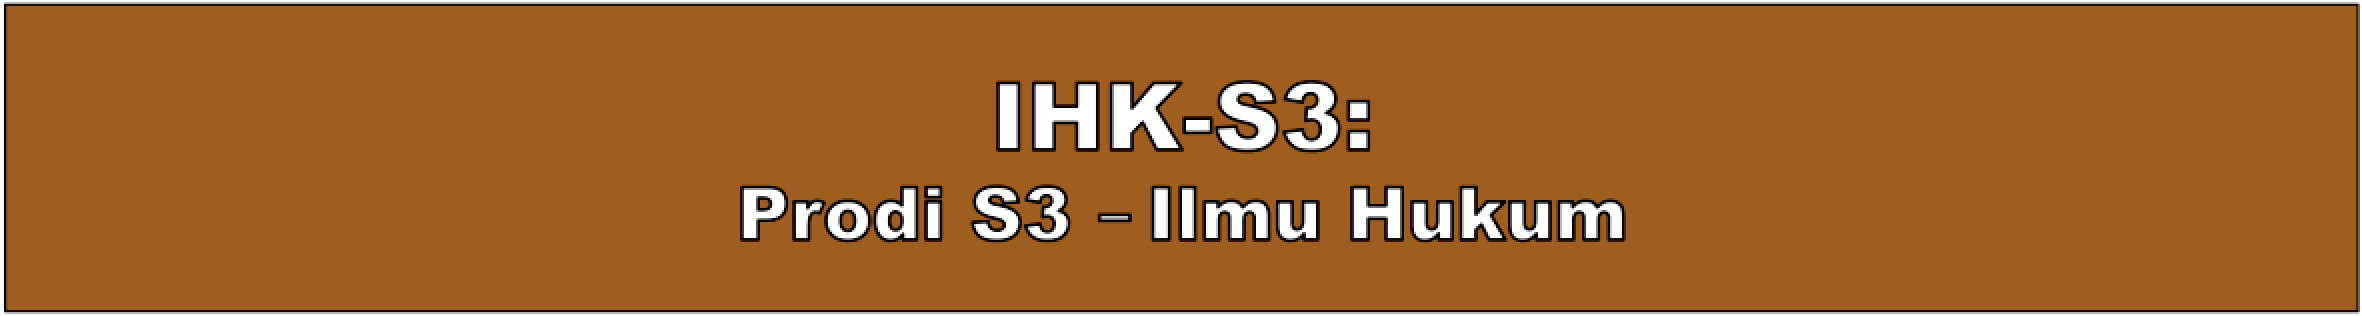 S3 IHK